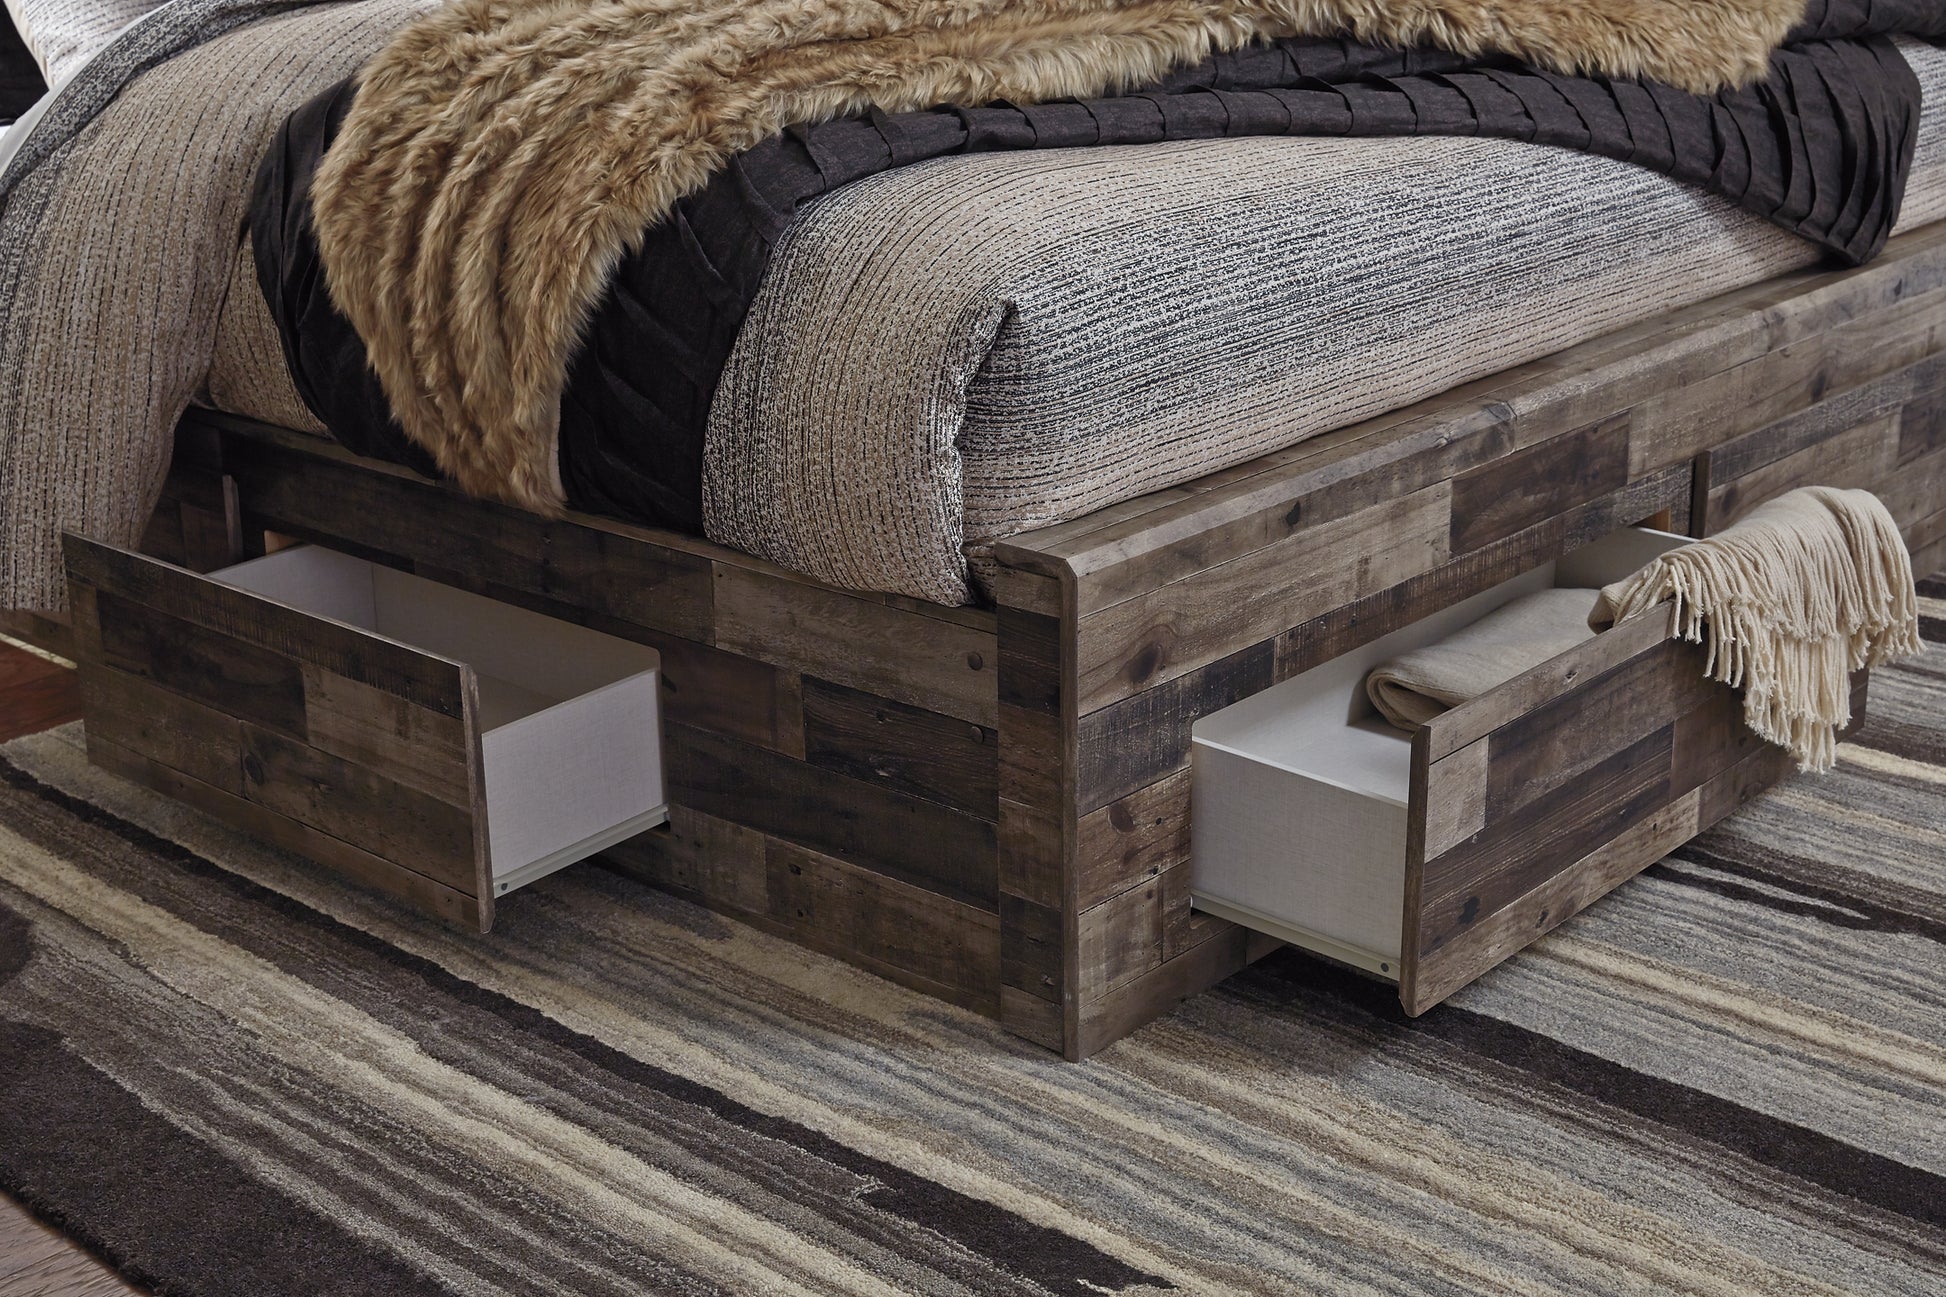 Derekson Queen Panel Bed with 6 Storage Drawers with Dresser Benchcraft®